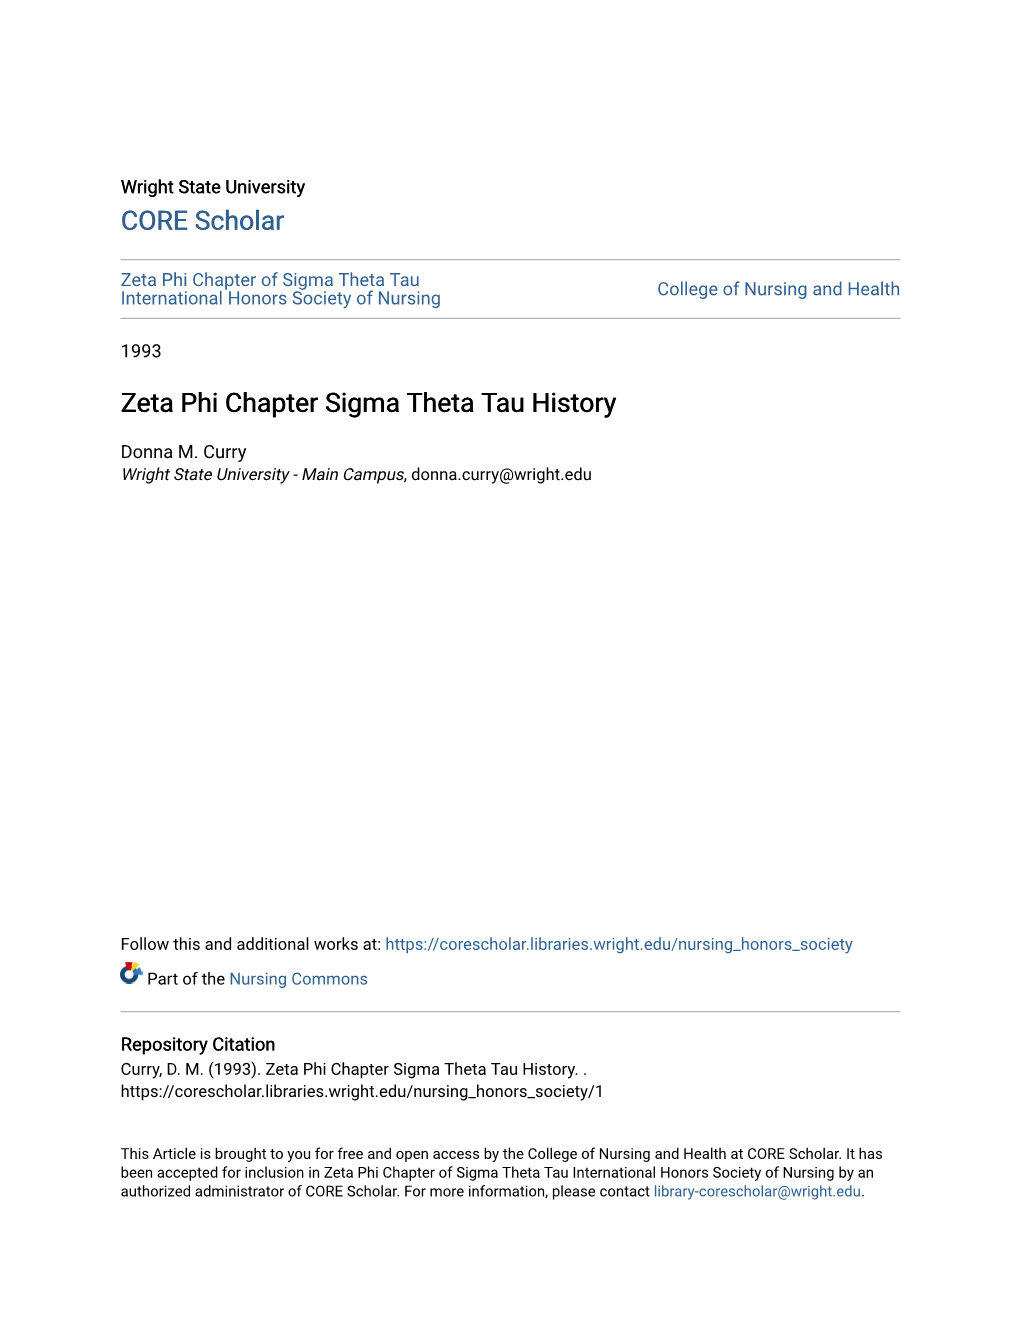 Zeta Phi Chapter Sigma Theta Tau History